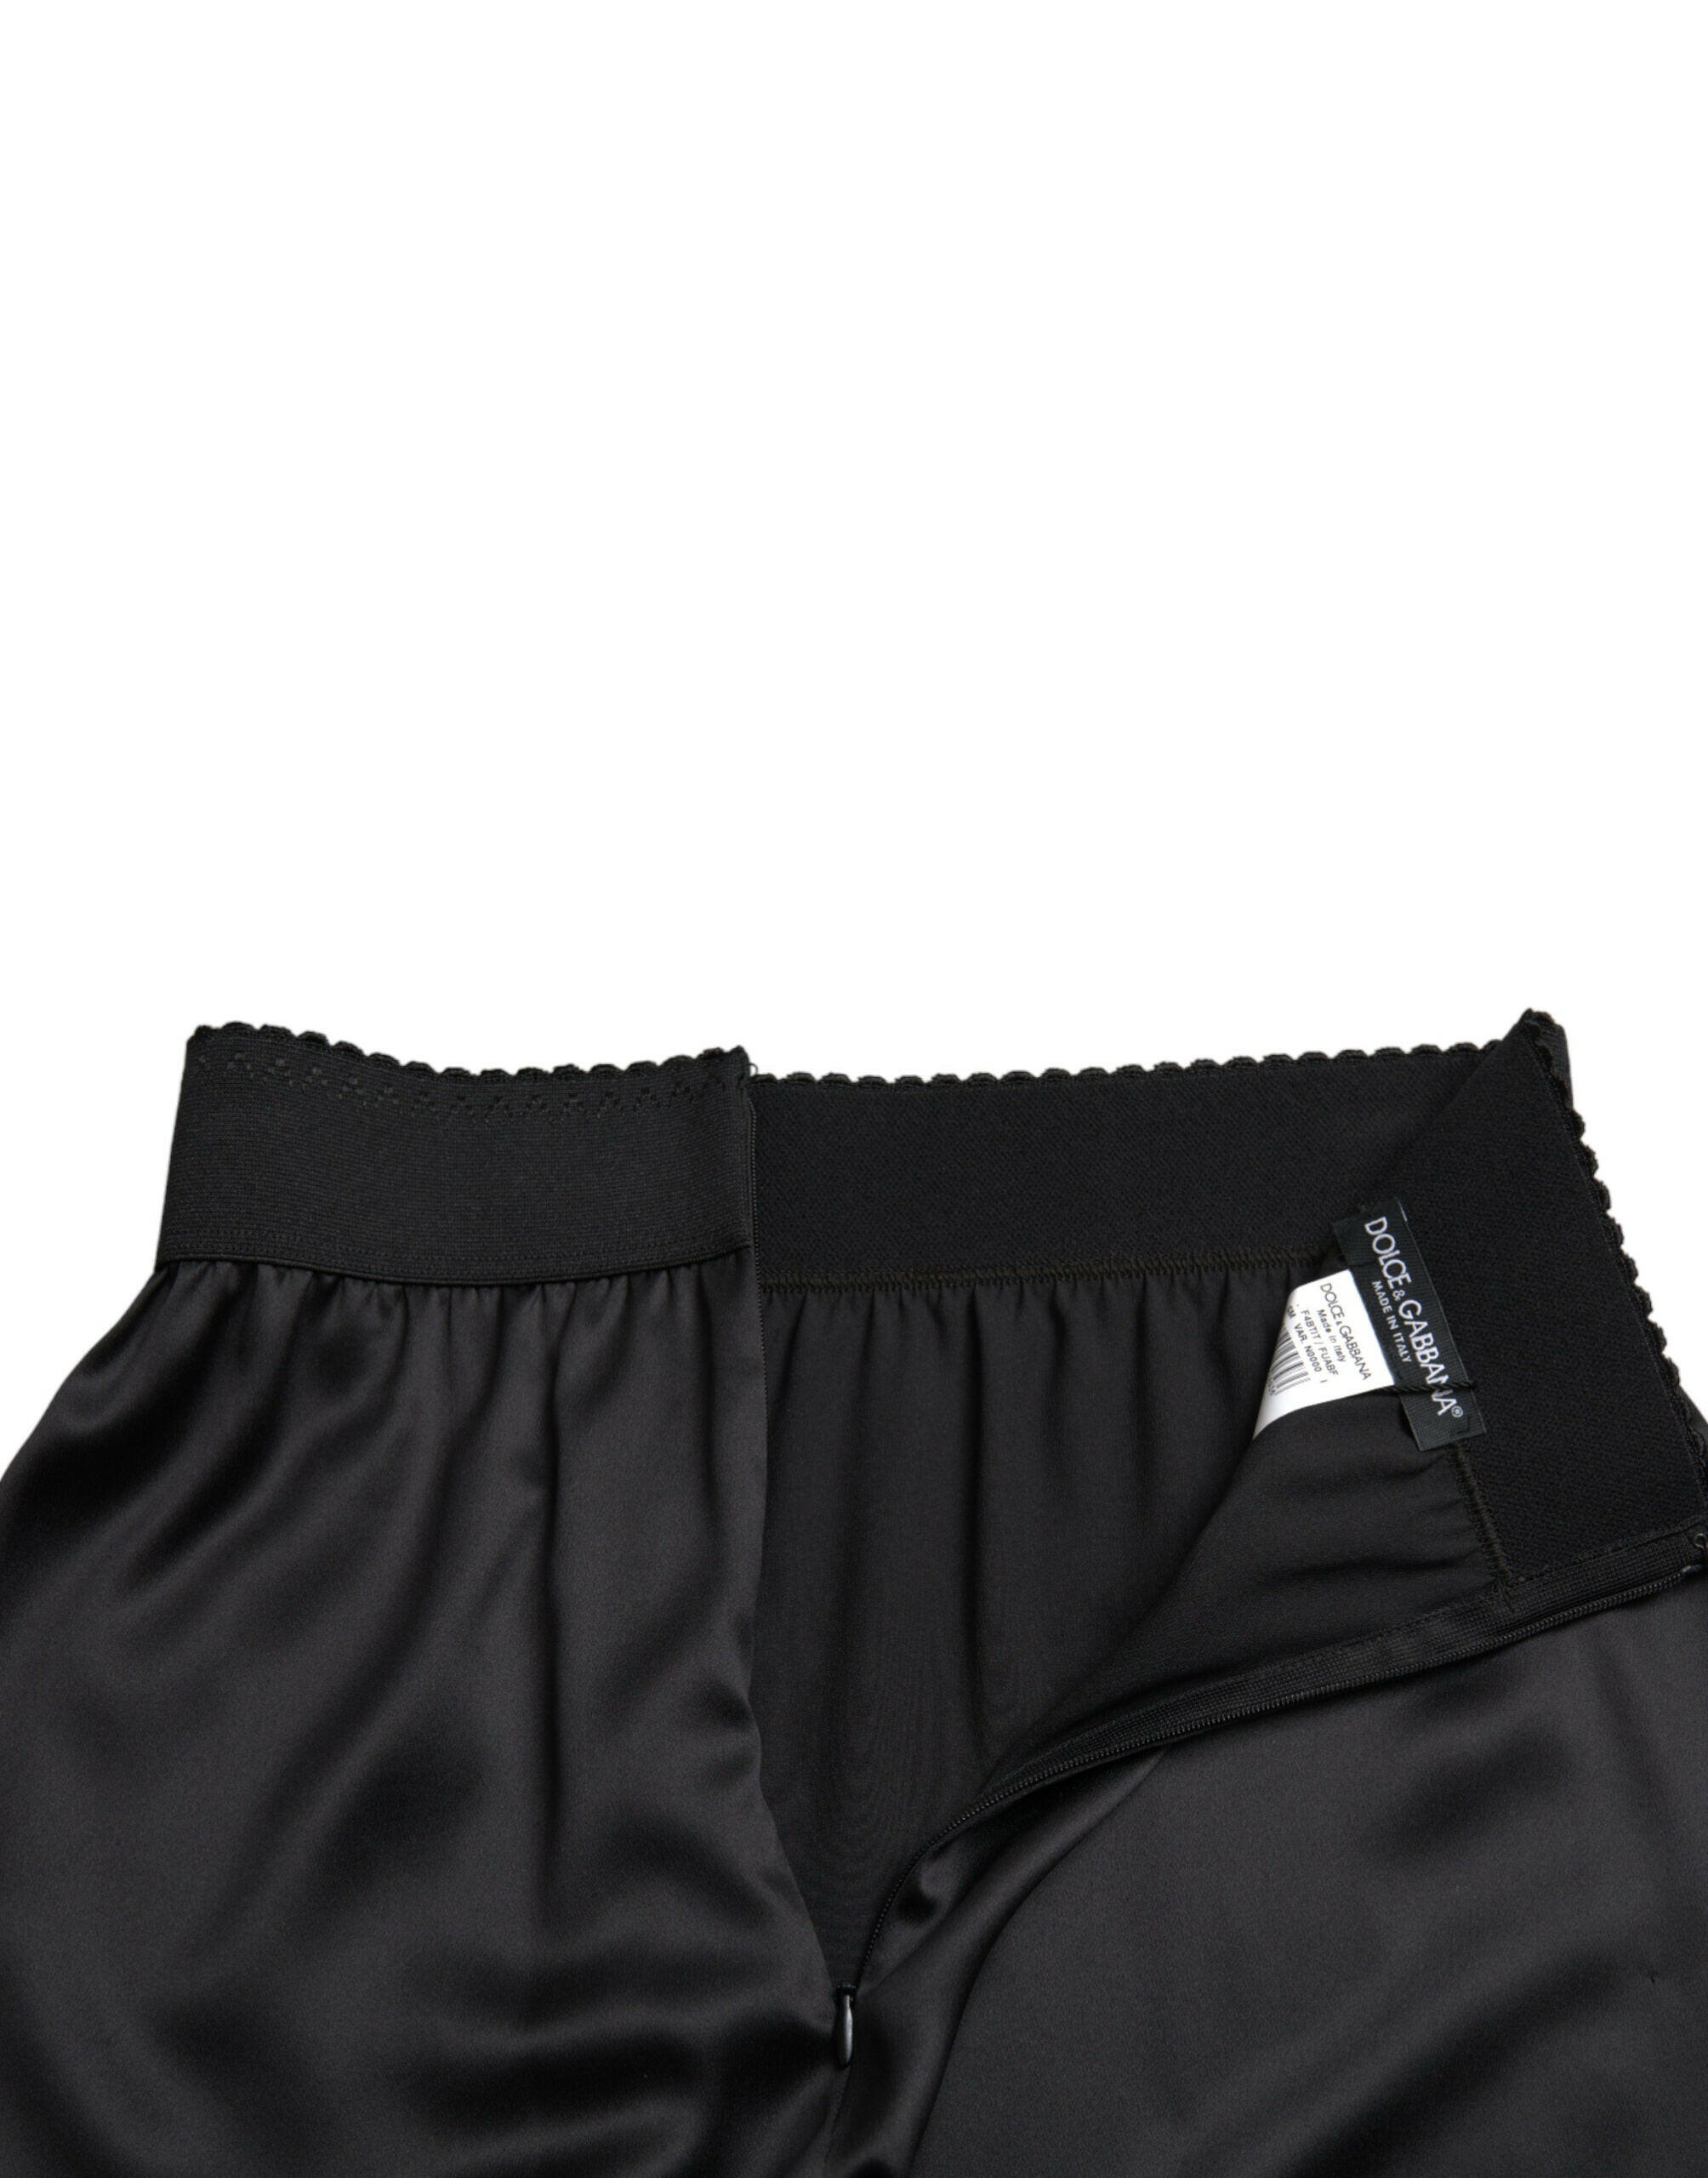 Dolce & Gabbana Black Lace High Waist Pencil Cut Mini Skirt